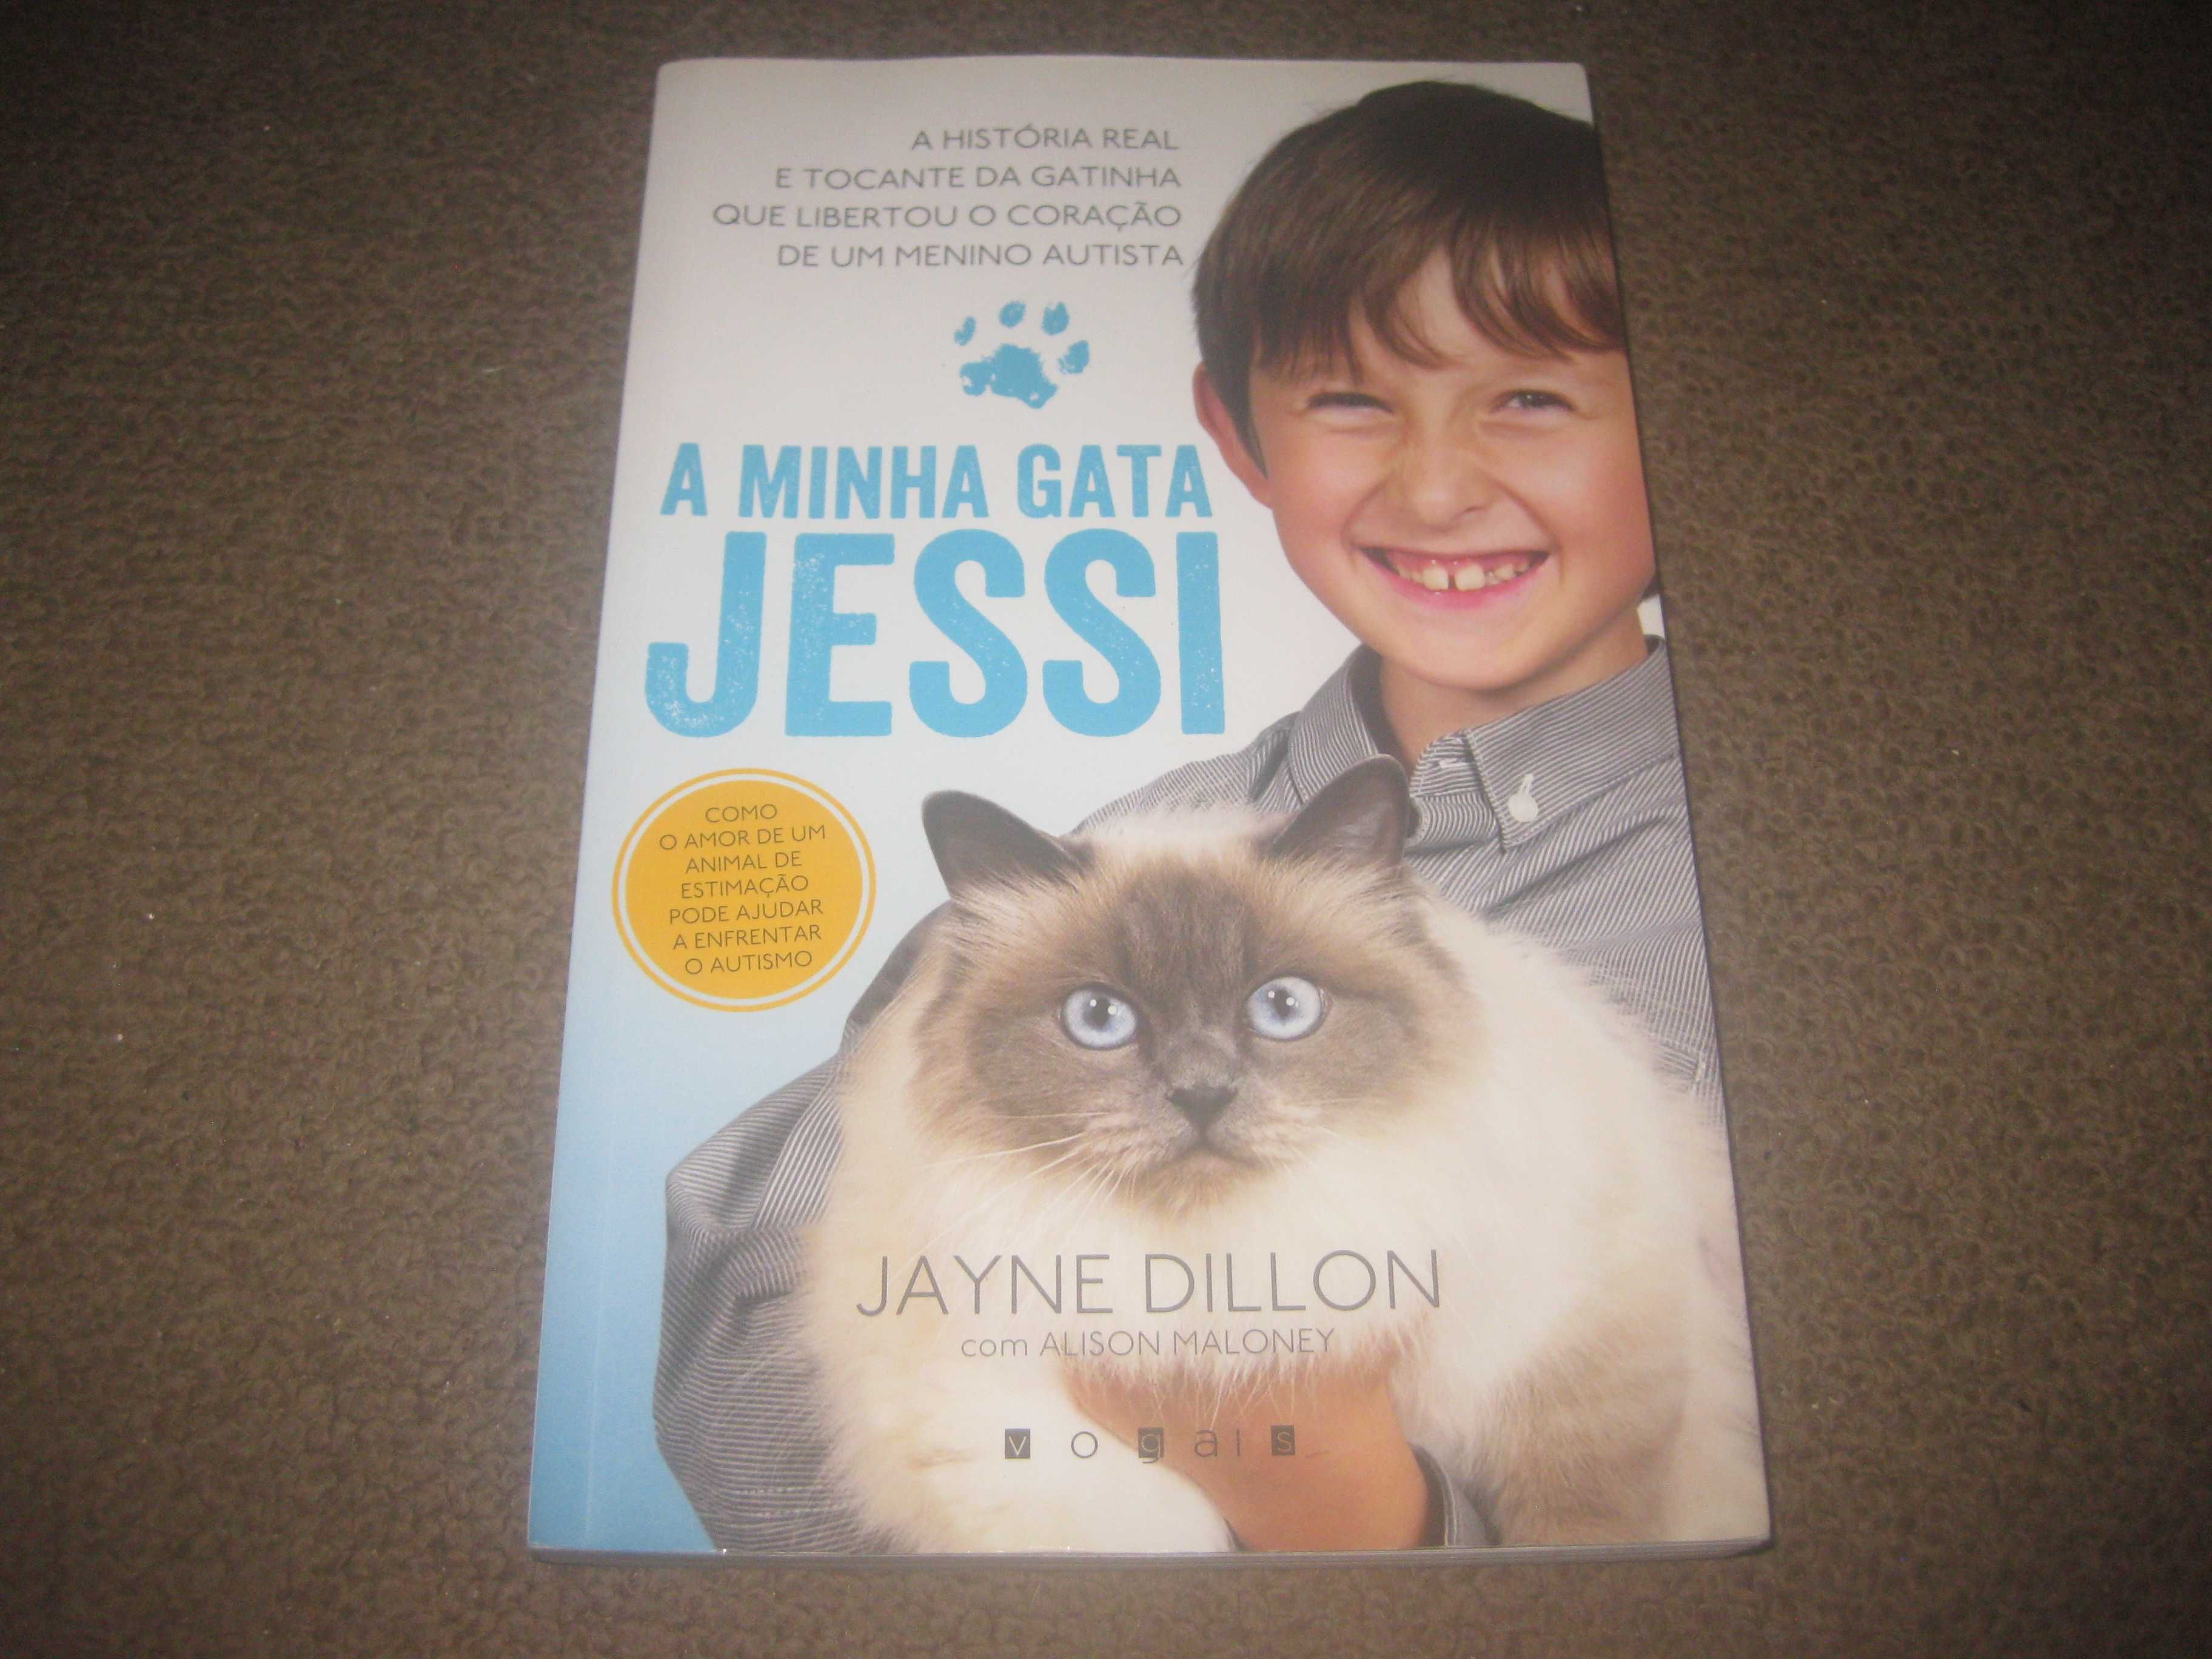 Livro "A Minha Gata Jessi" de Jayne Dillon